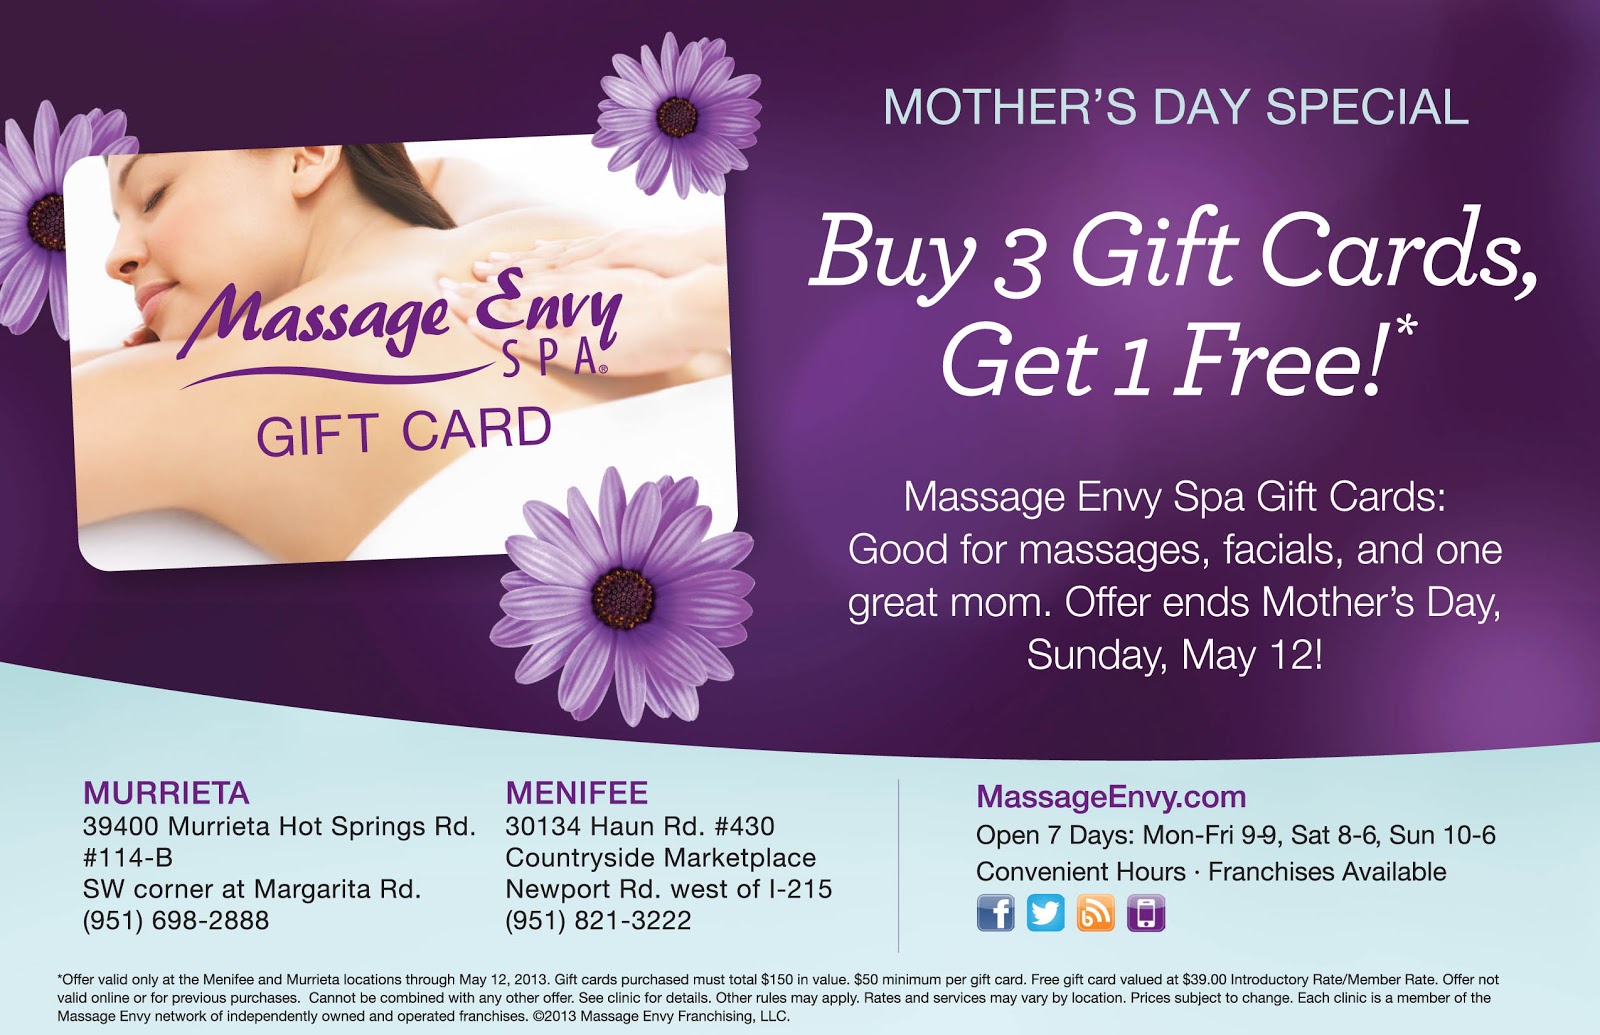 Mother's Day Special at Massage Envy Spa Menifee Menifee 24/7